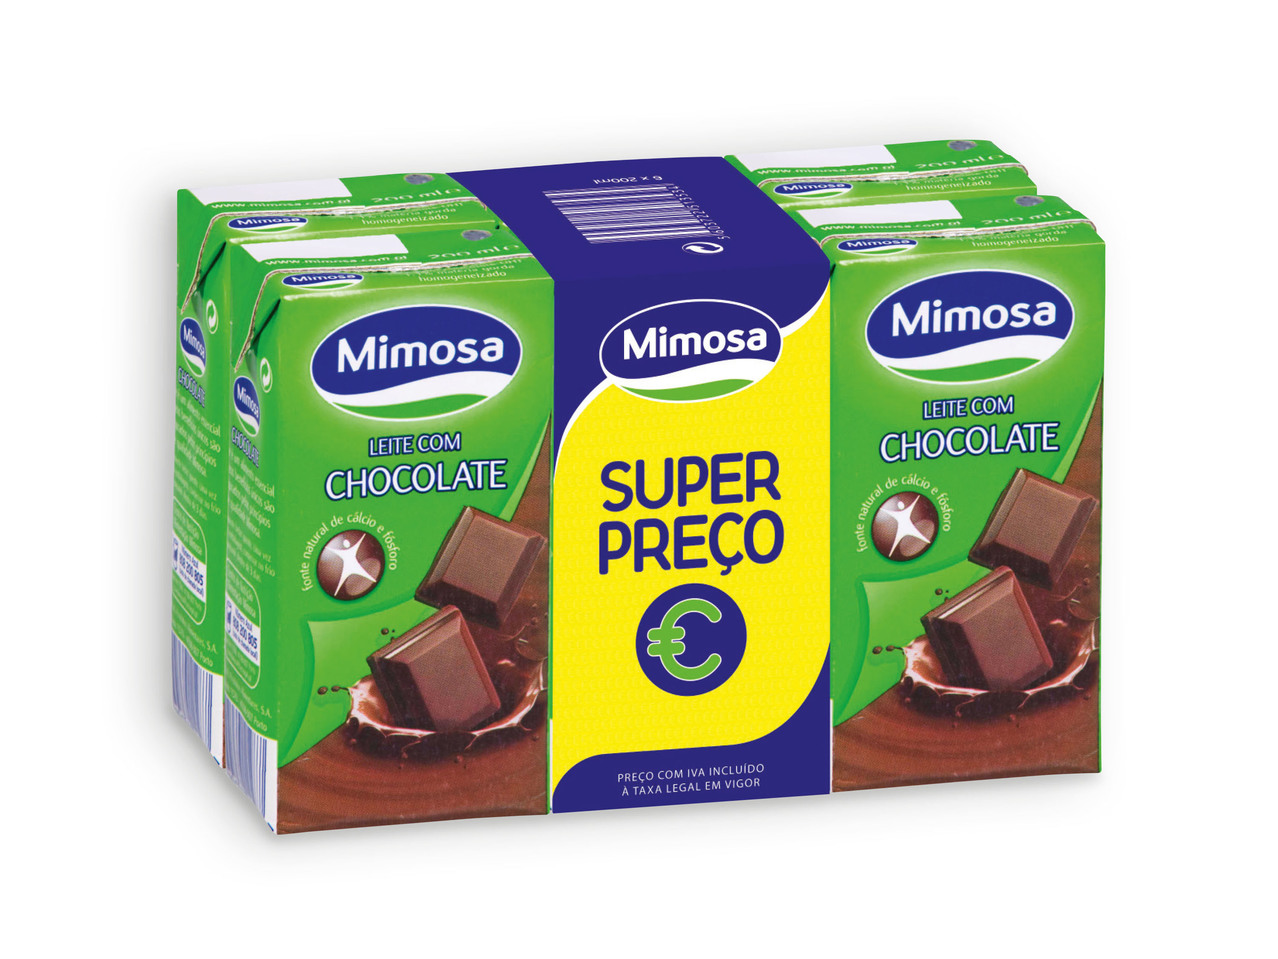 MIMOSA(R) Leite com Chocolate